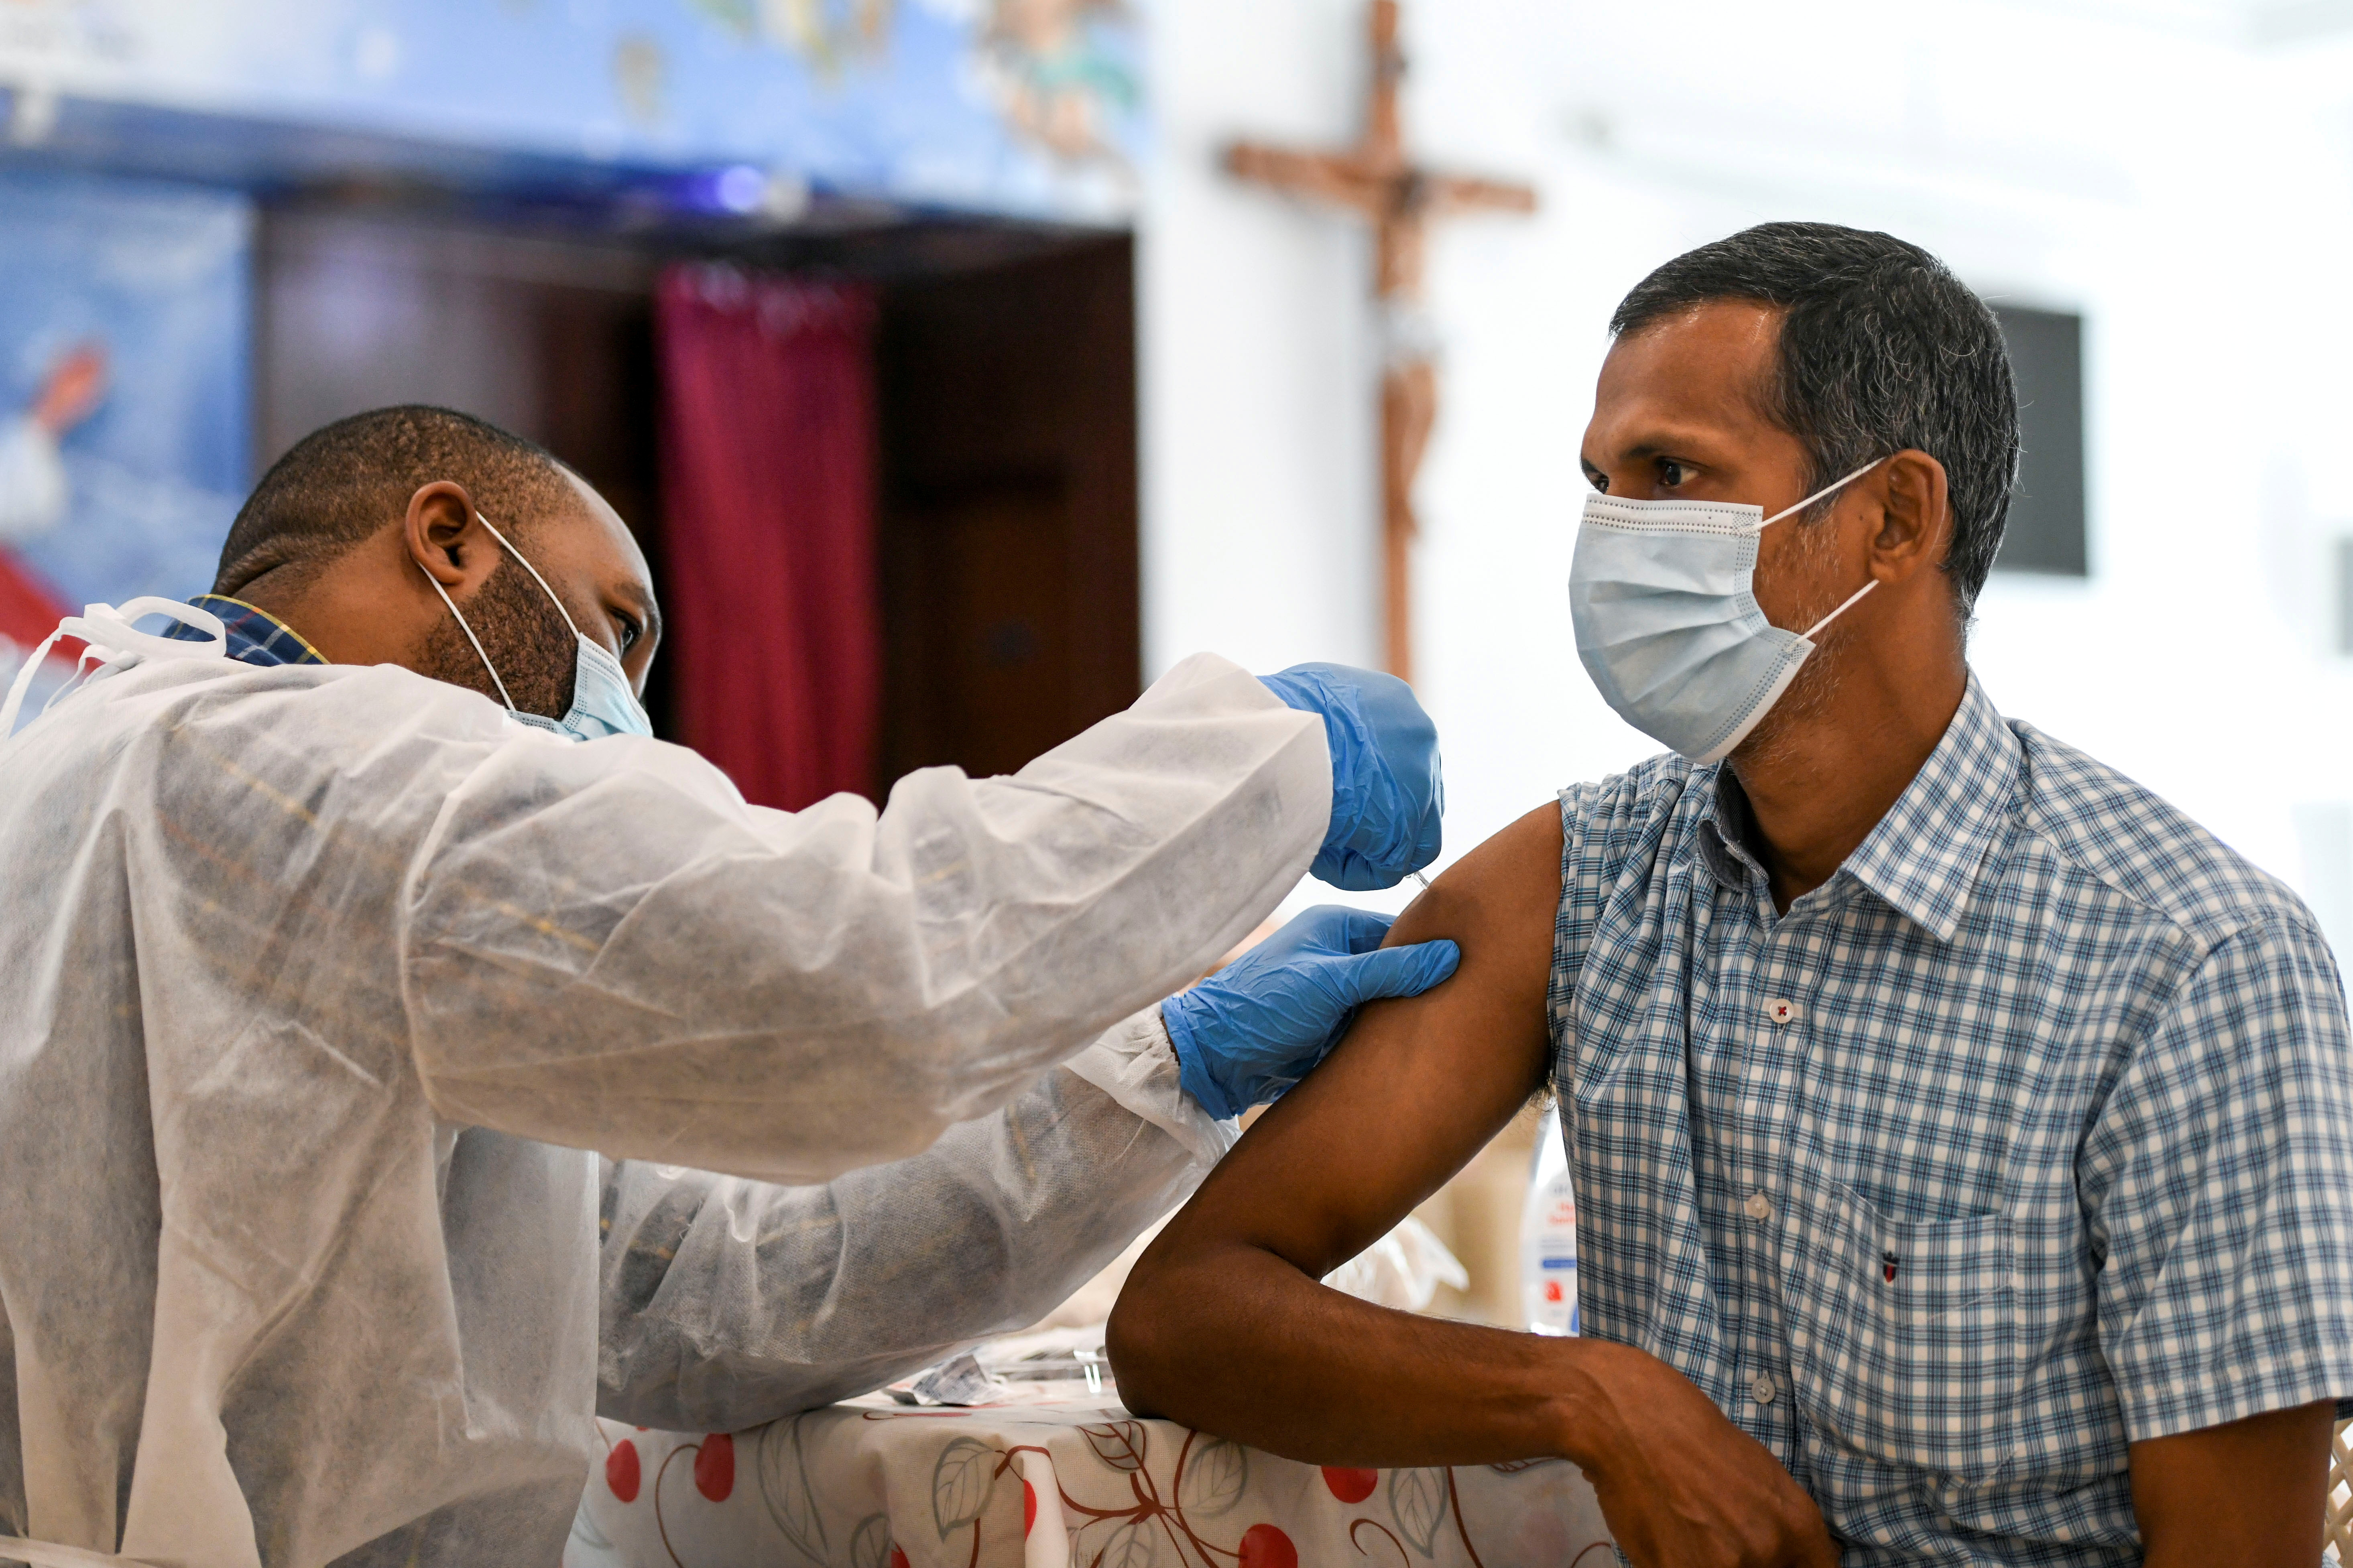 A man receives a dose of a vaccine against the coronavirus disease (COVID-19)at St. Paul's Church in Abu Dhabi